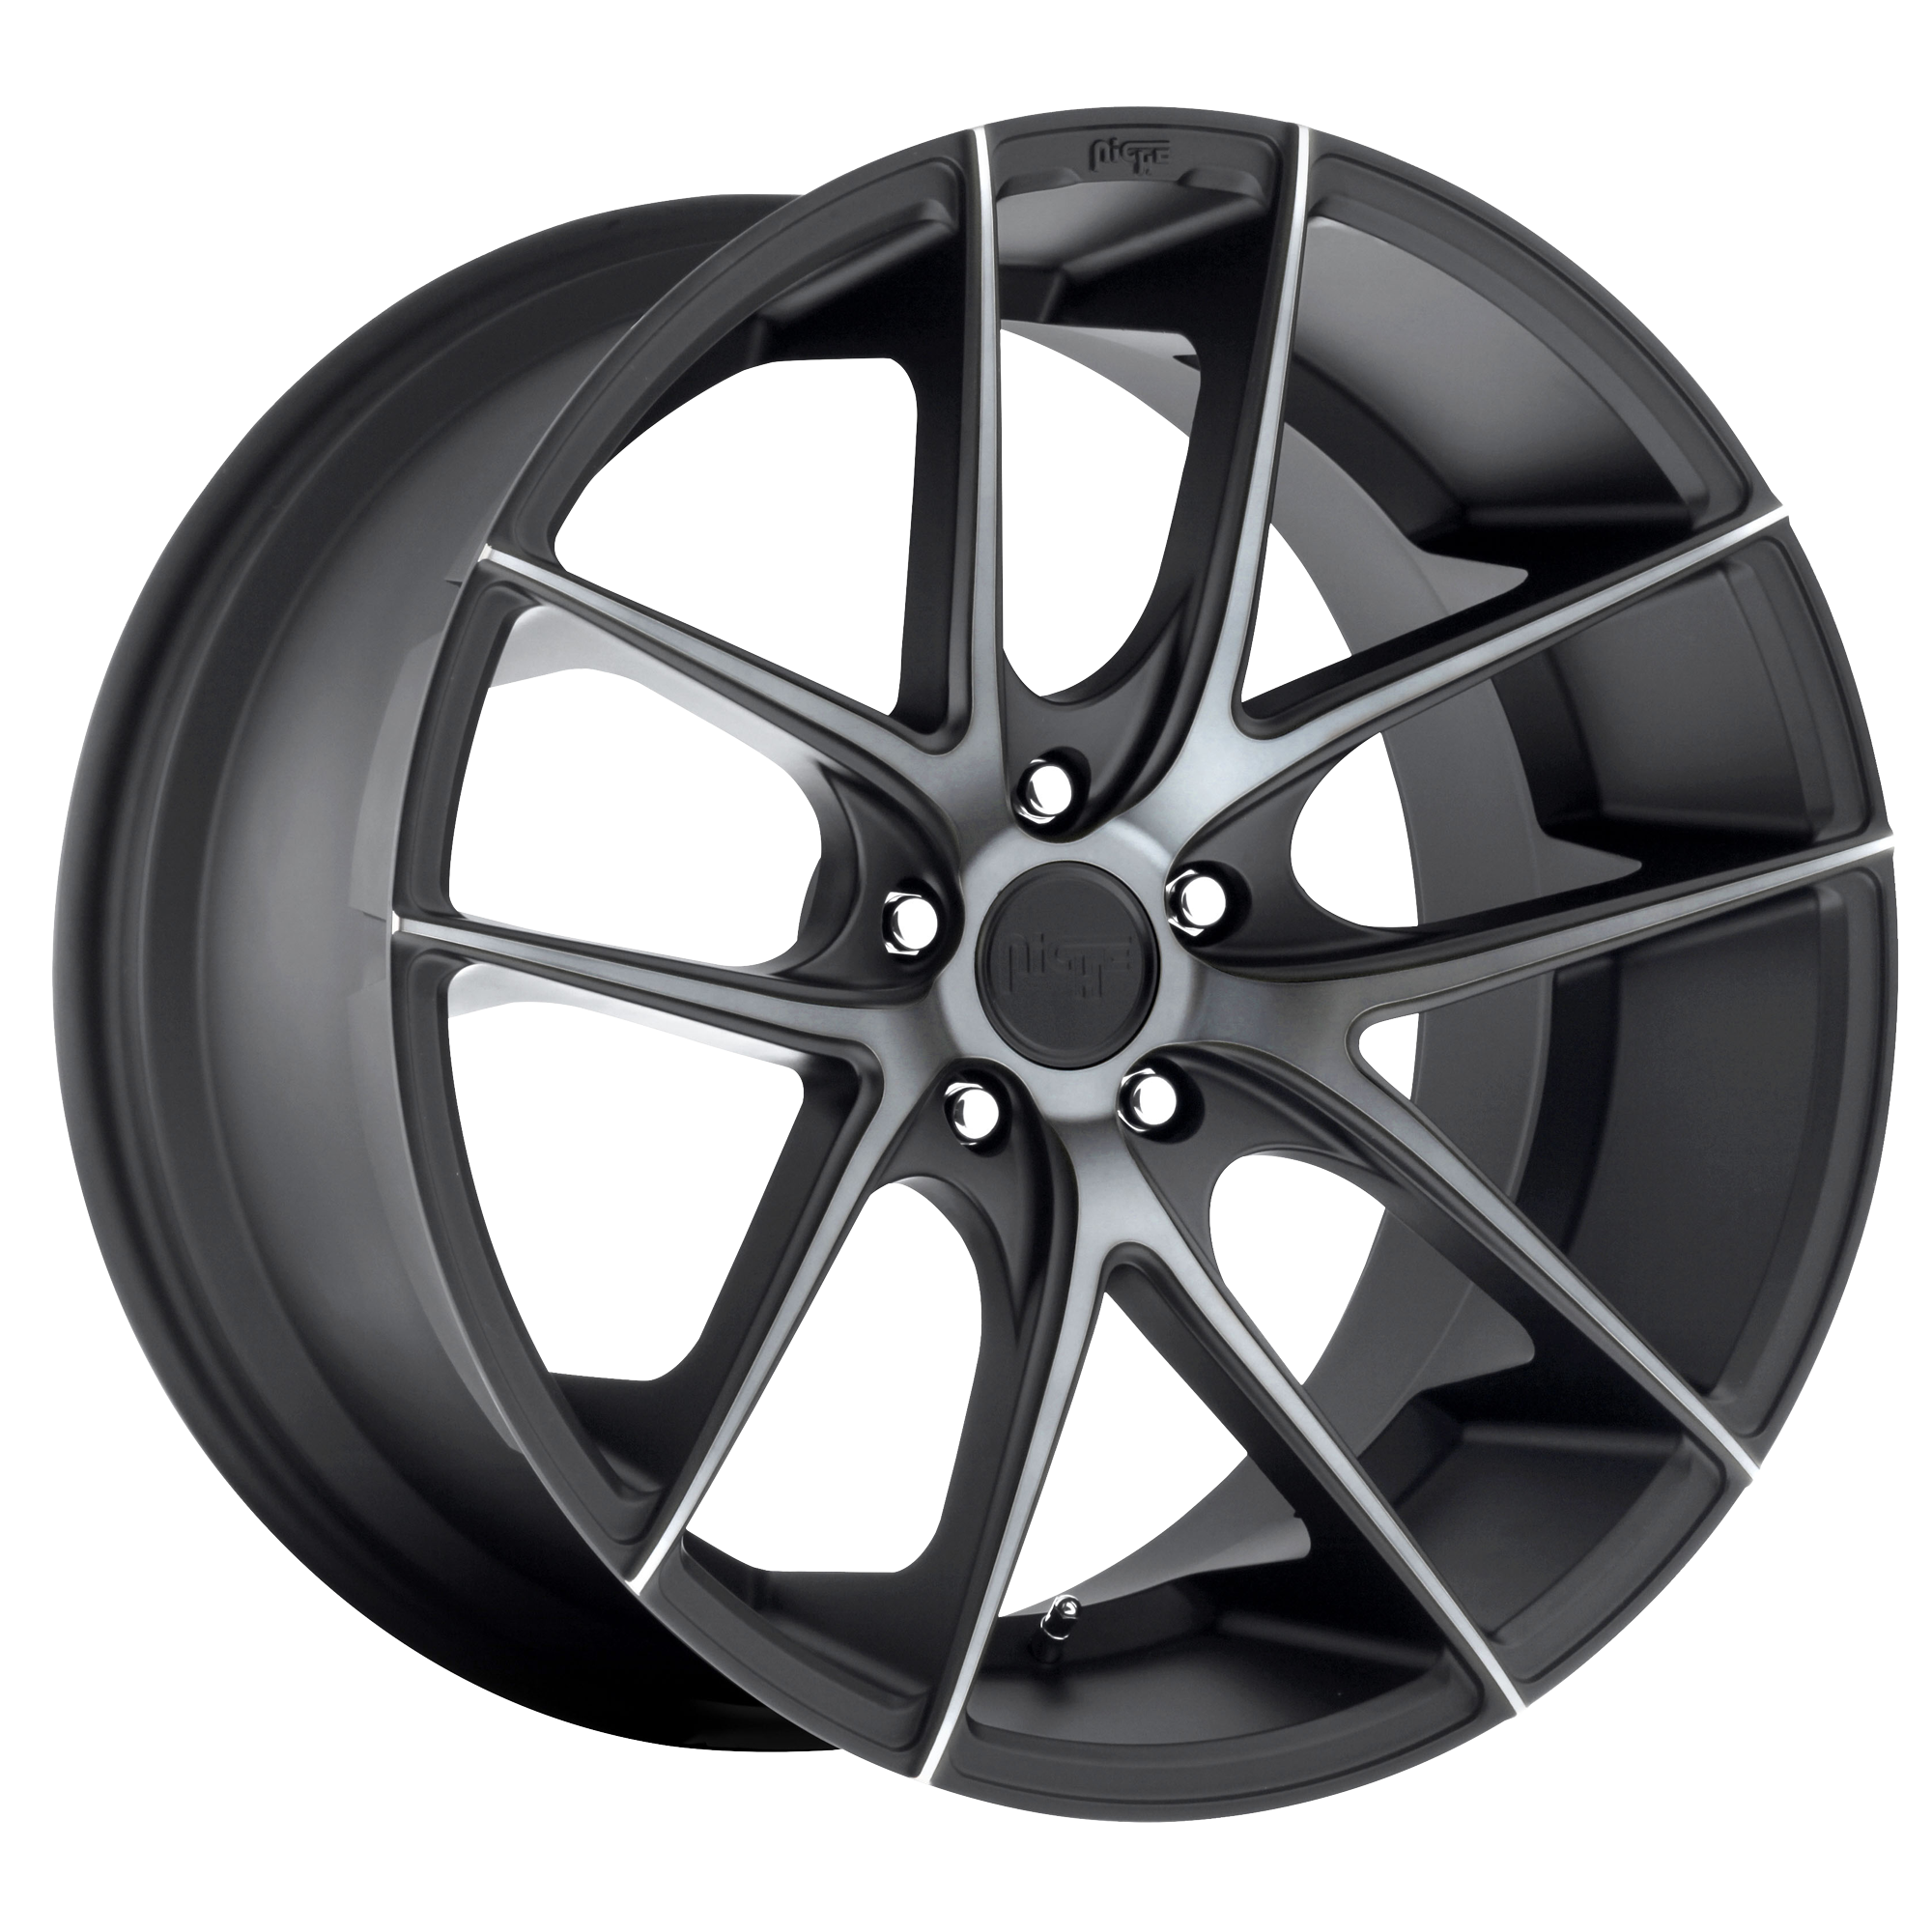 TARGA 20x8.5 5x112.00 MATTE BLACK DOUBLE DARK TINT (34 mm) - Tires and Engine Performance